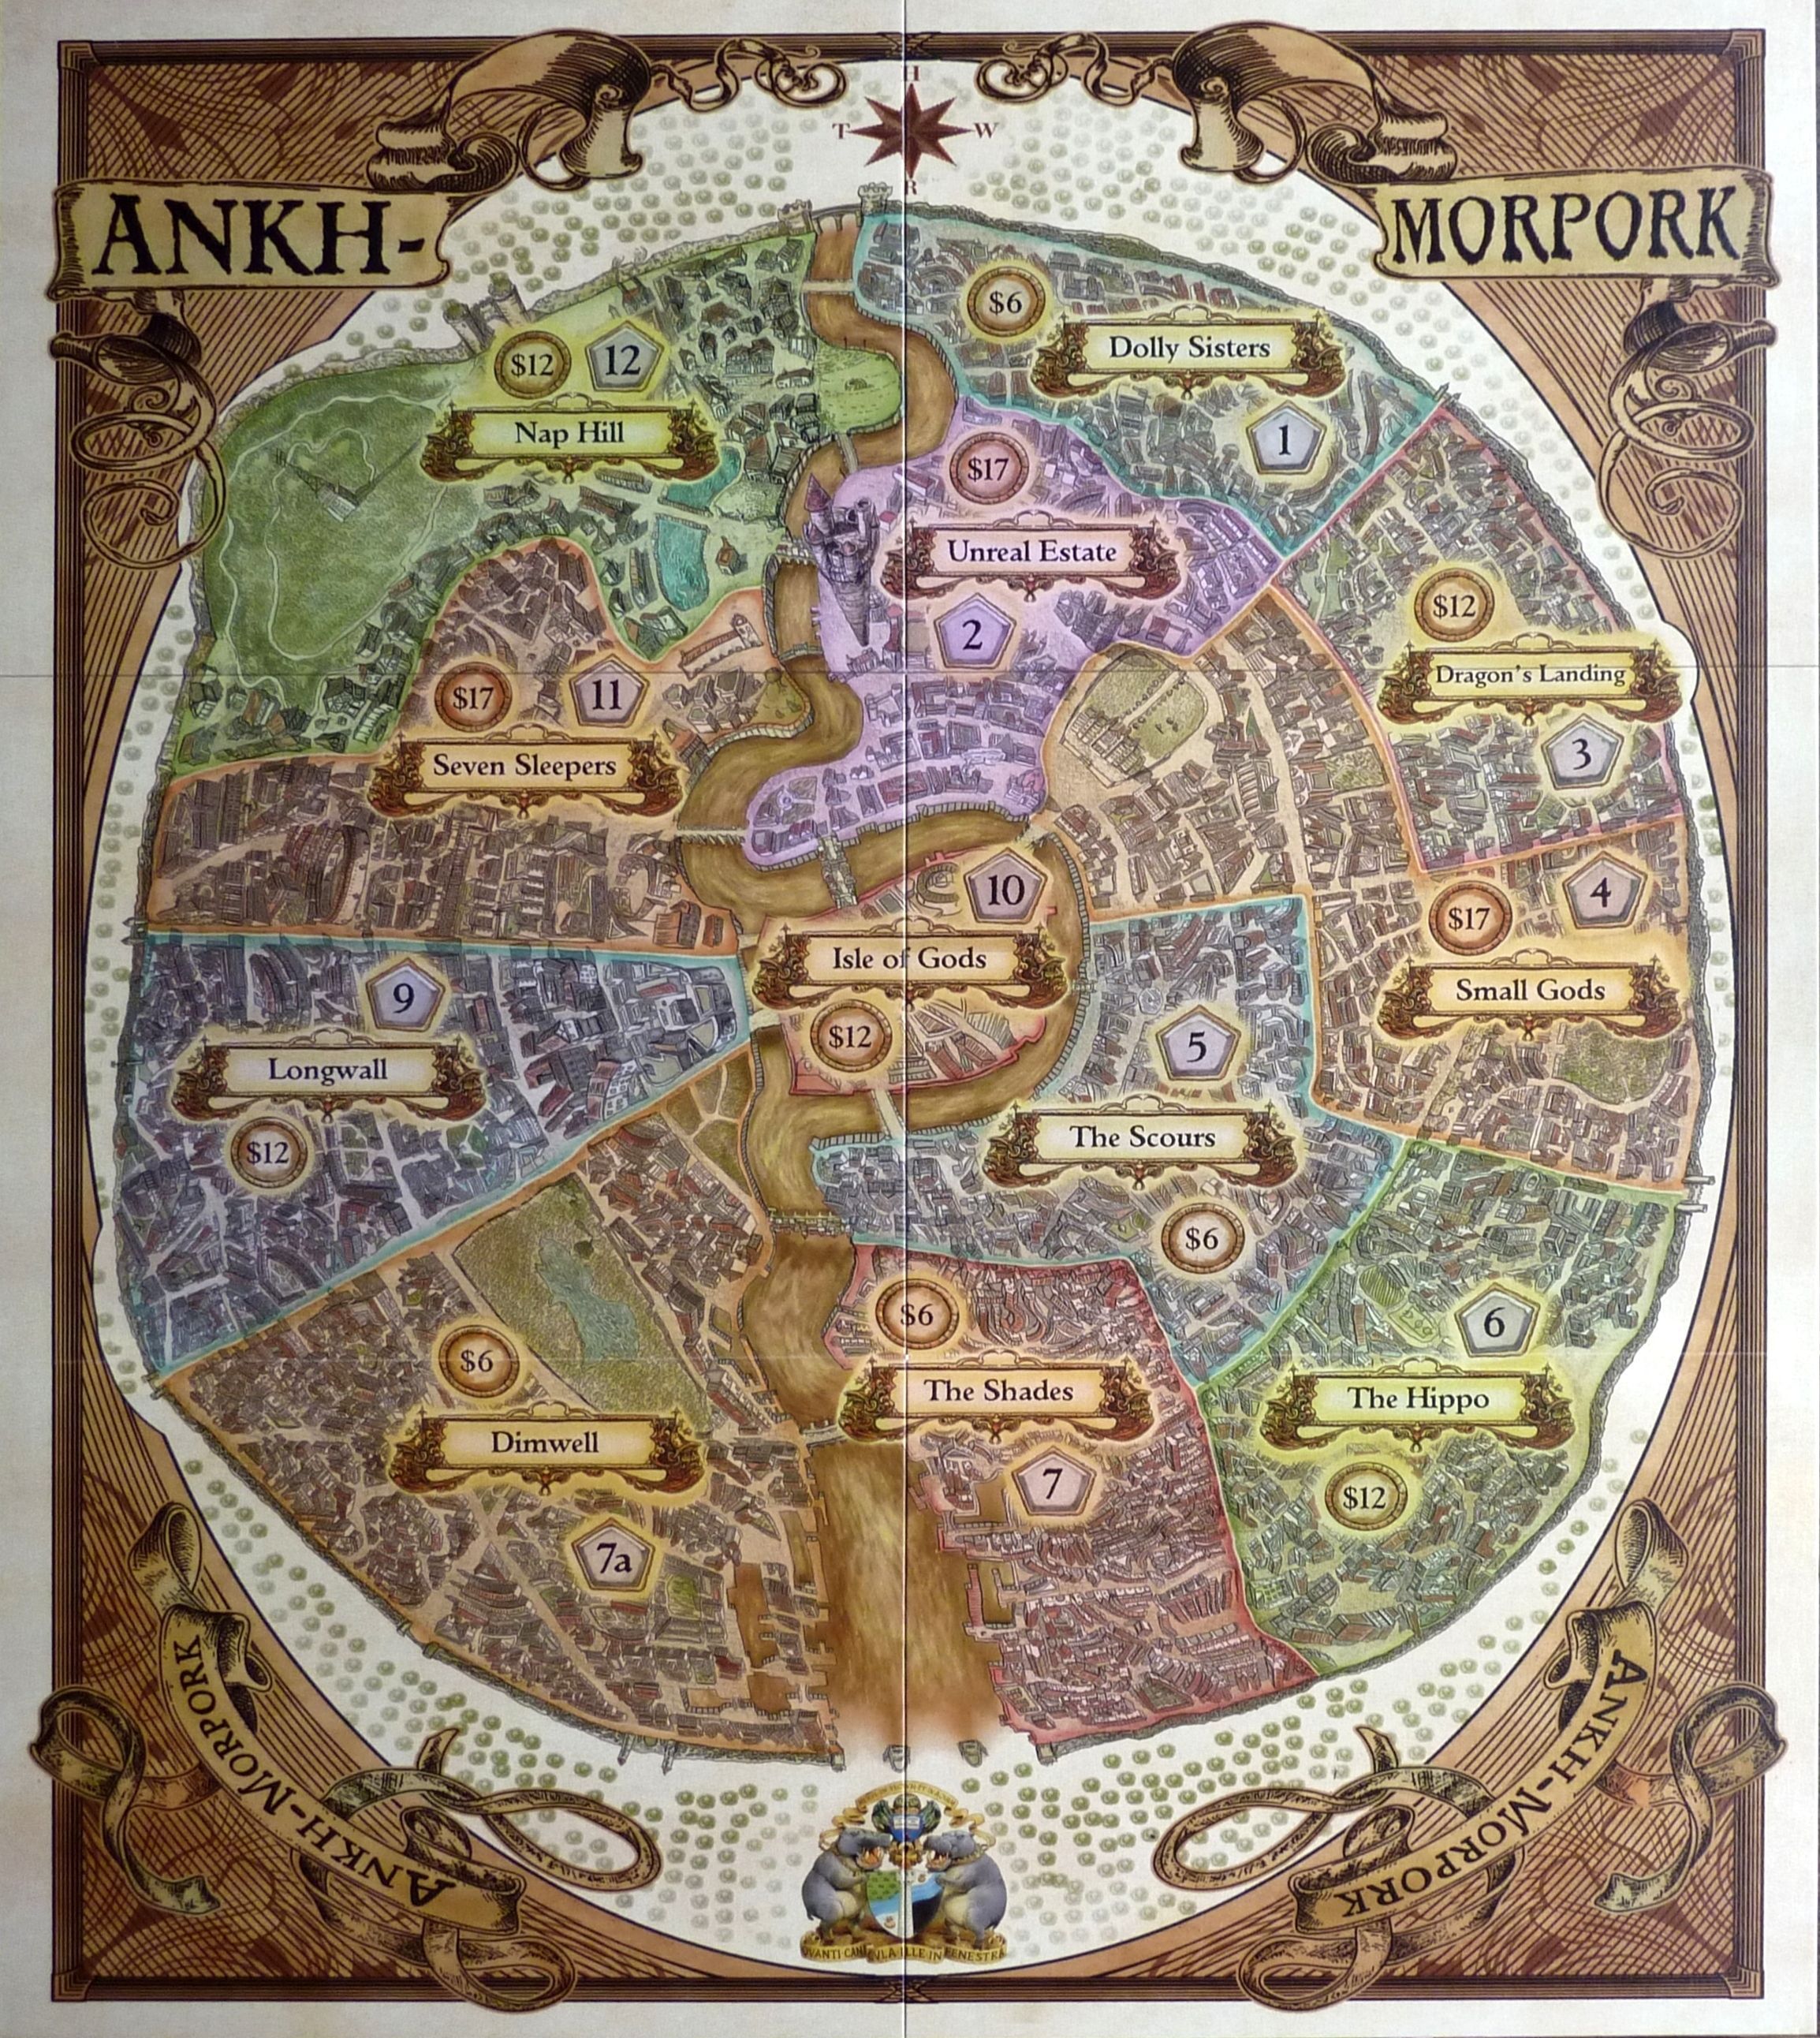 Discworld: Ankh-Morpork | Image | BoardGameGeek